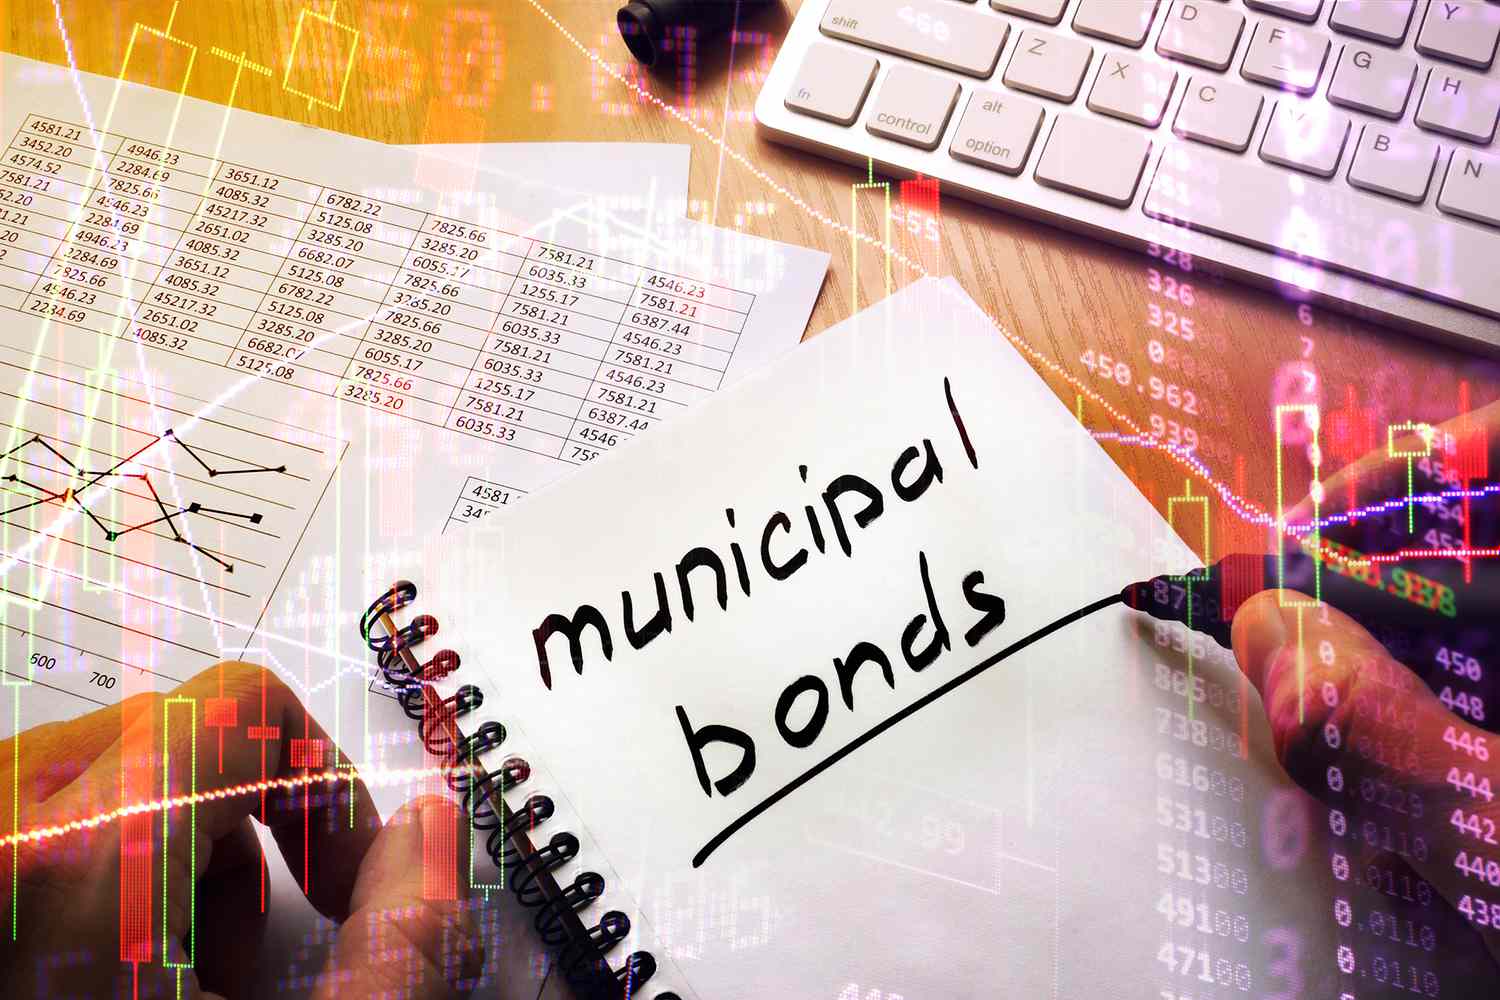 Municipal Bonds Written in a Note. Trading Concept.